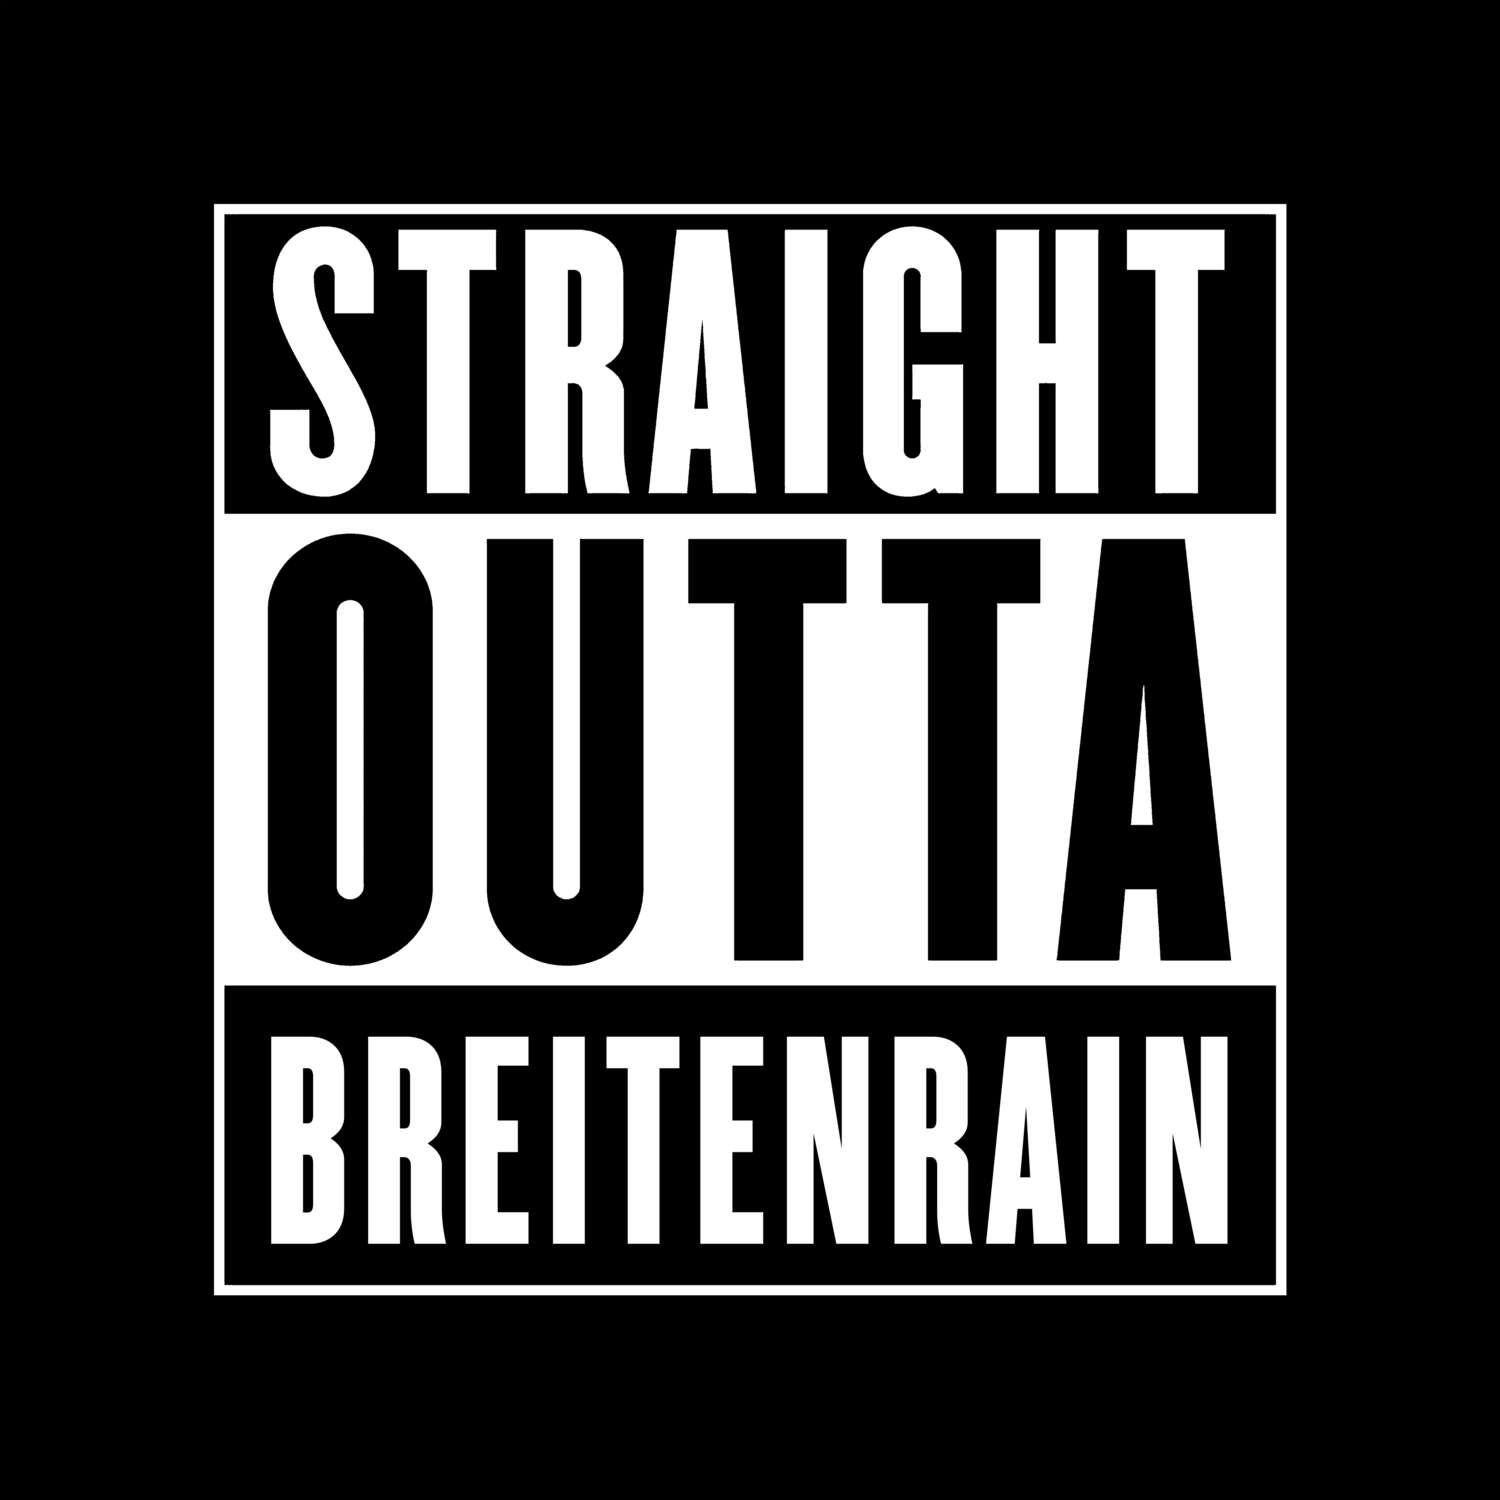 Breitenrain T-Shirt »Straight Outta«